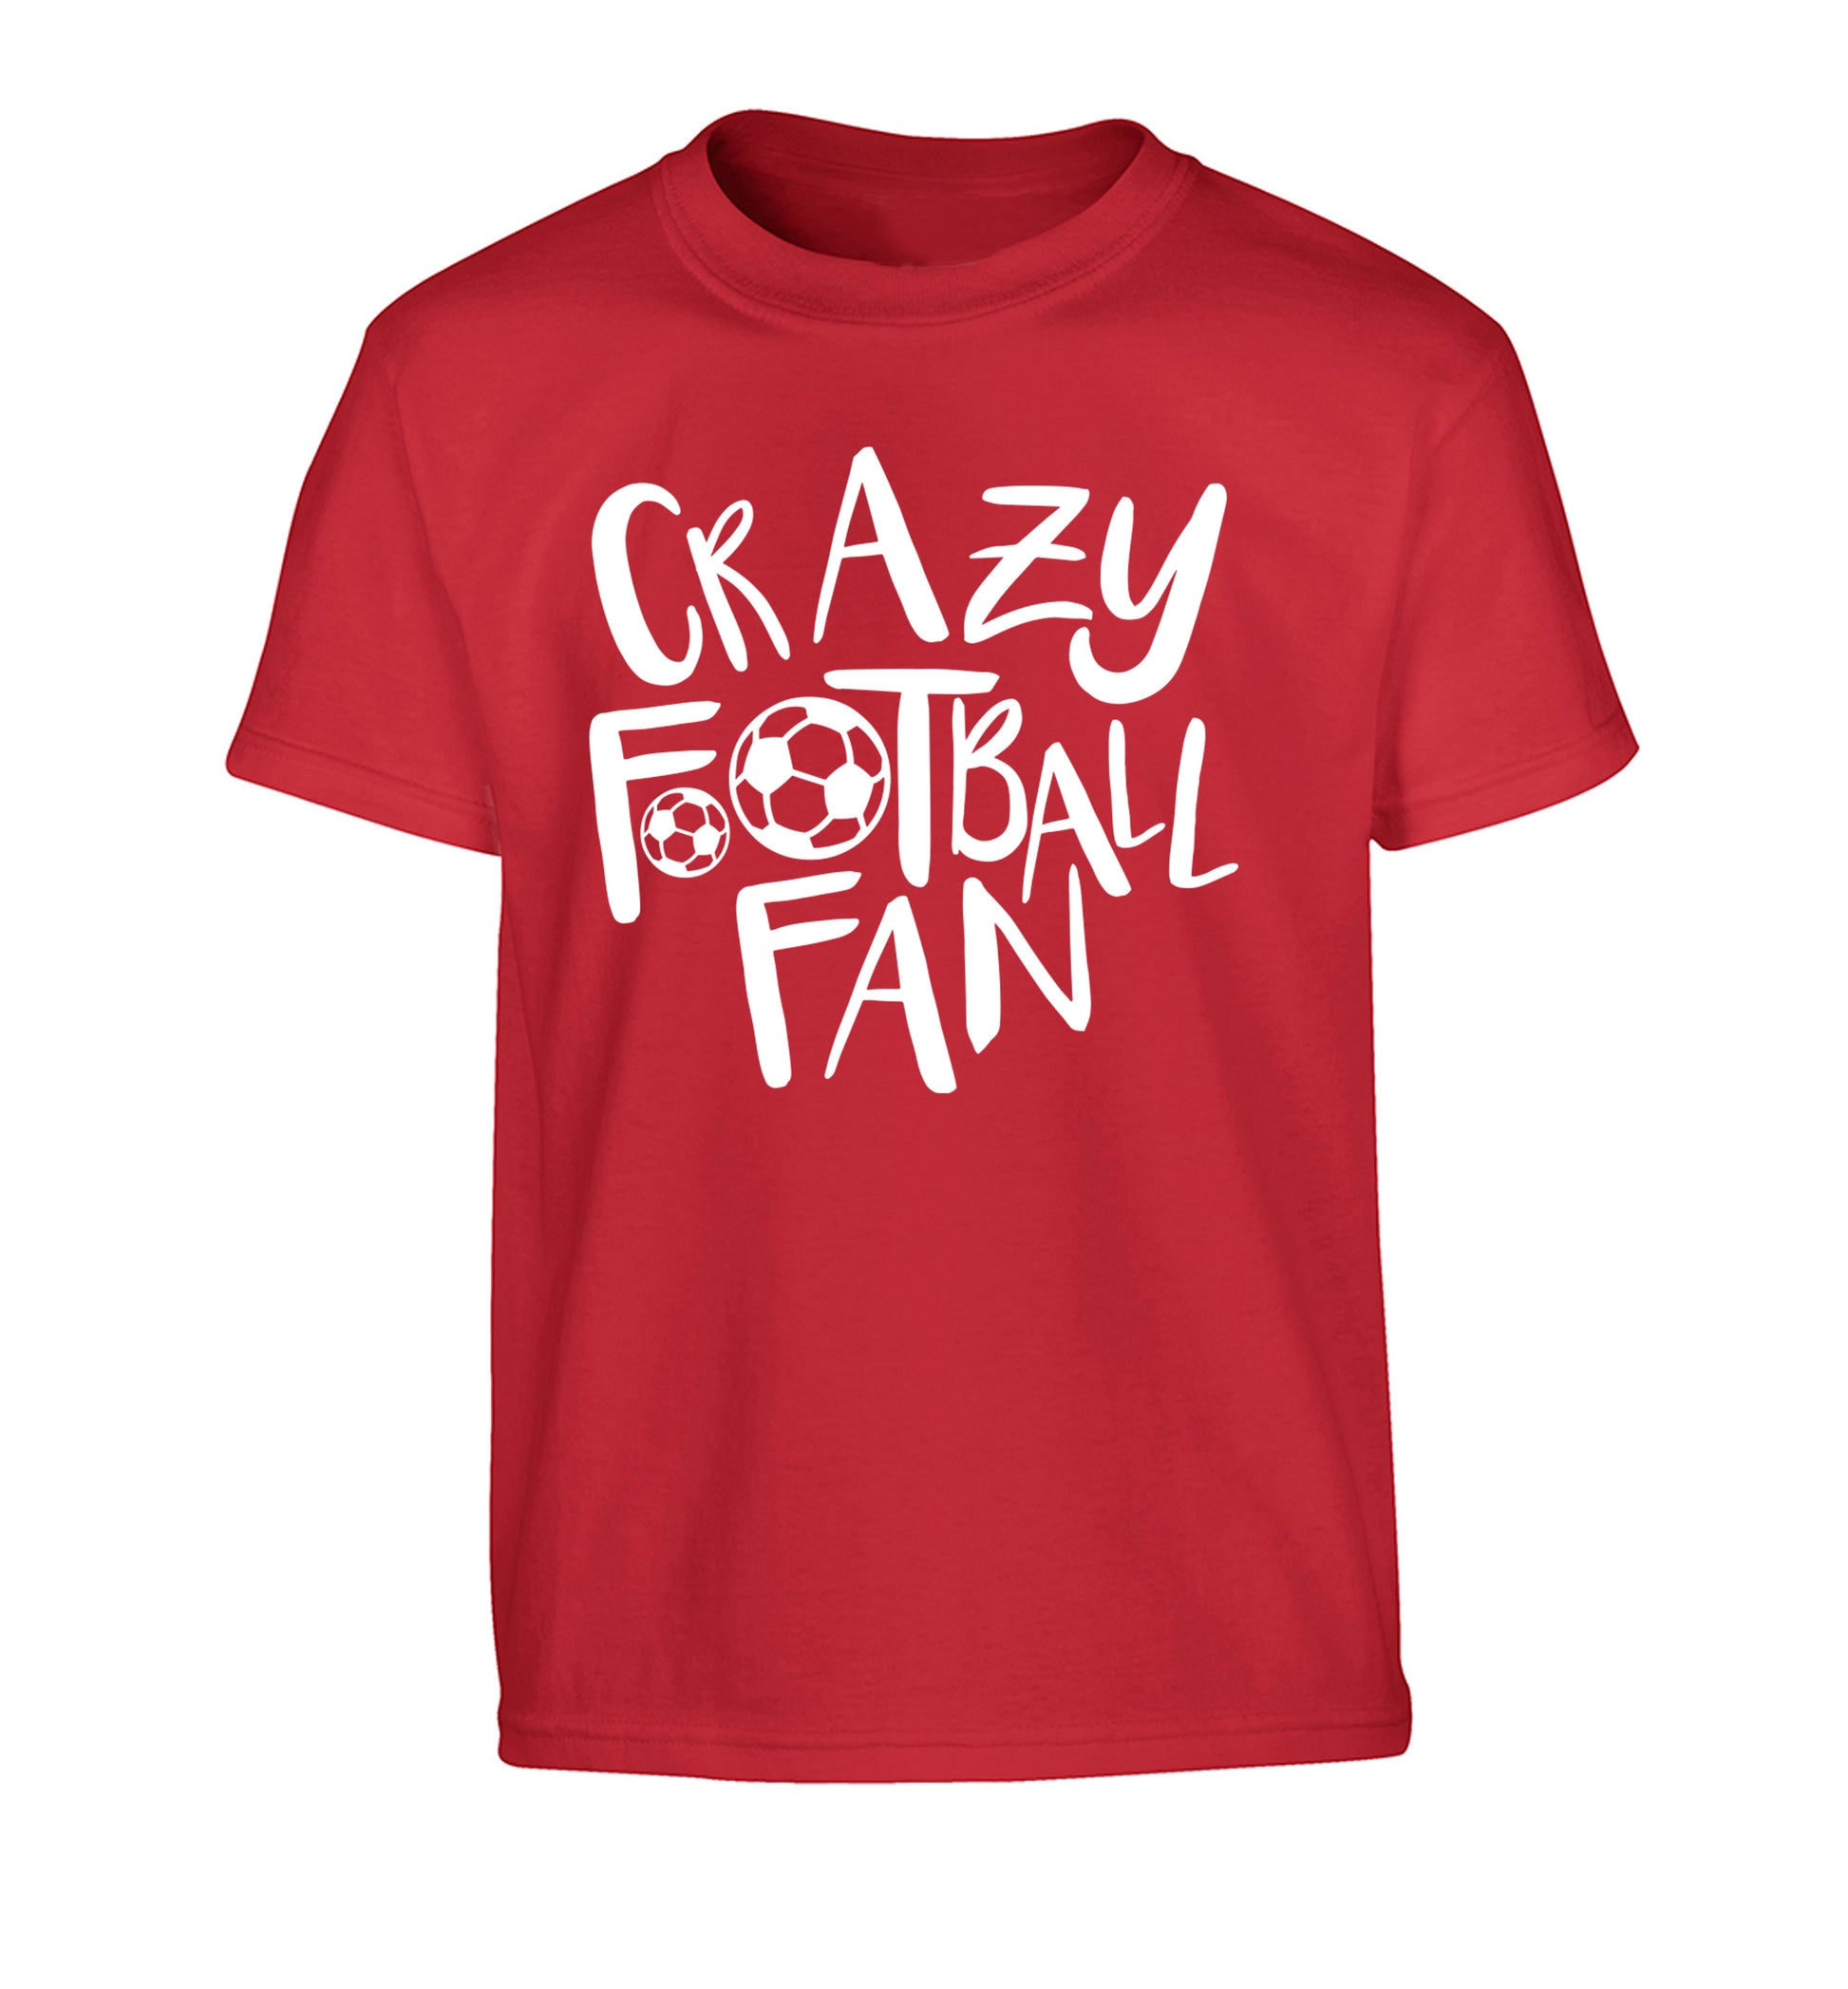 Crazy football fan Children's red Tshirt 12-14 Years